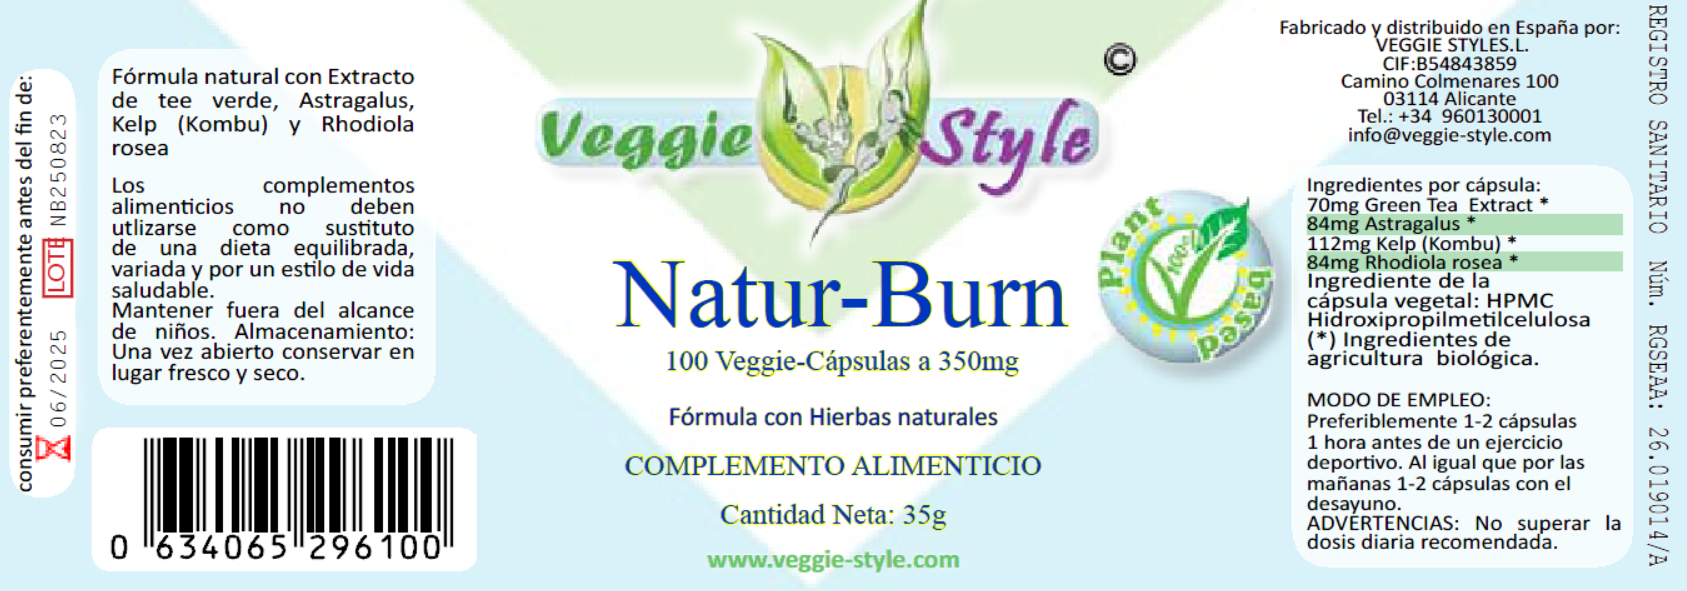 Veggie-Style-Natur-Burn